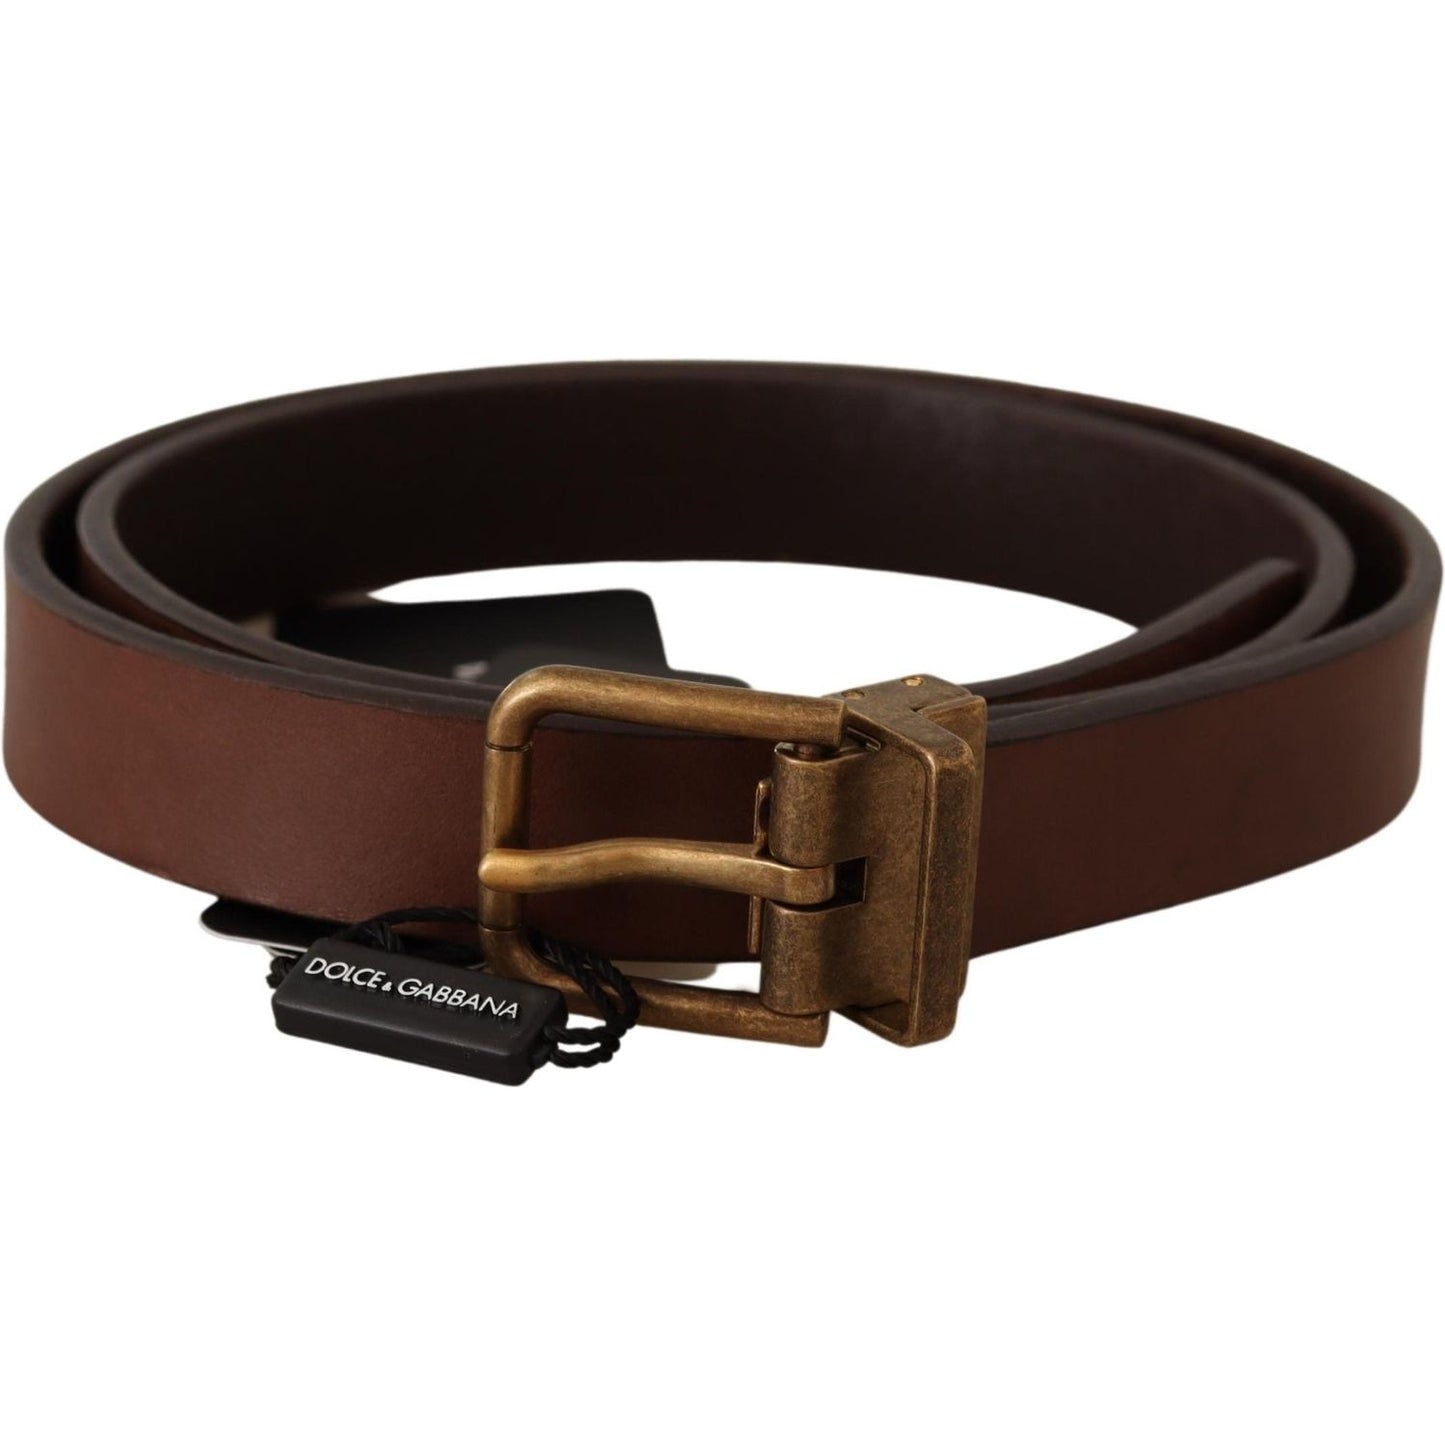 Dolce & Gabbana Elegant Brown Leather Belt with Gold Buckle brown-leather-rustic-buckle-cintura-belt